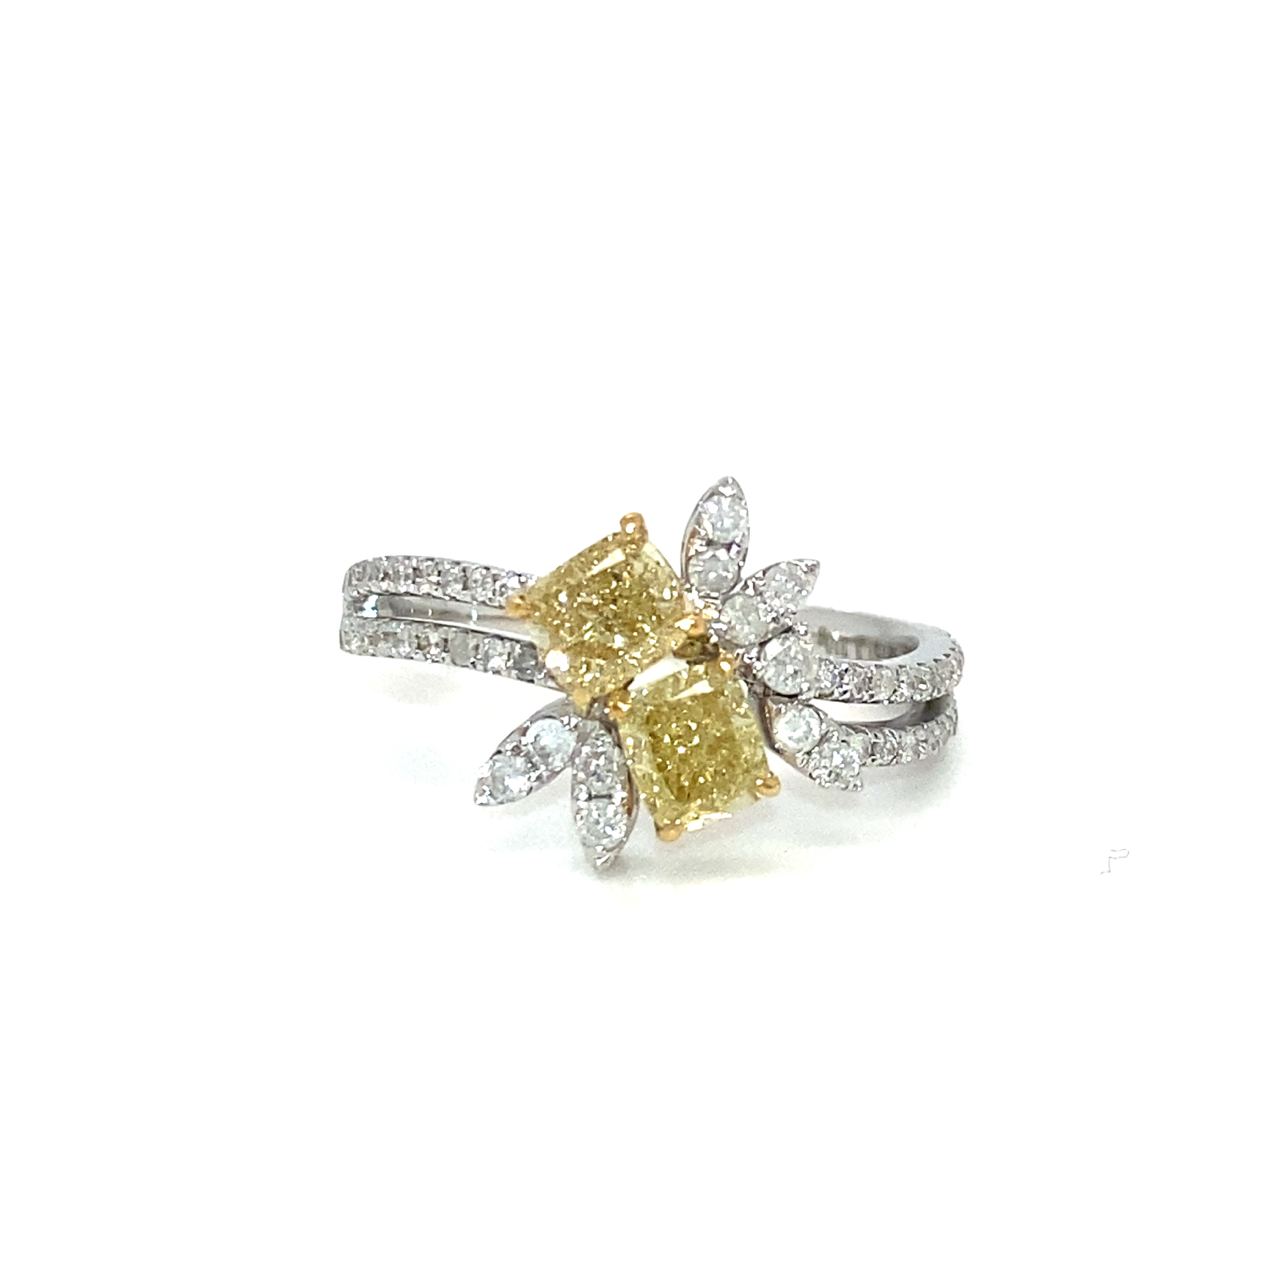 18K White Gold Yellow Diamond Ring